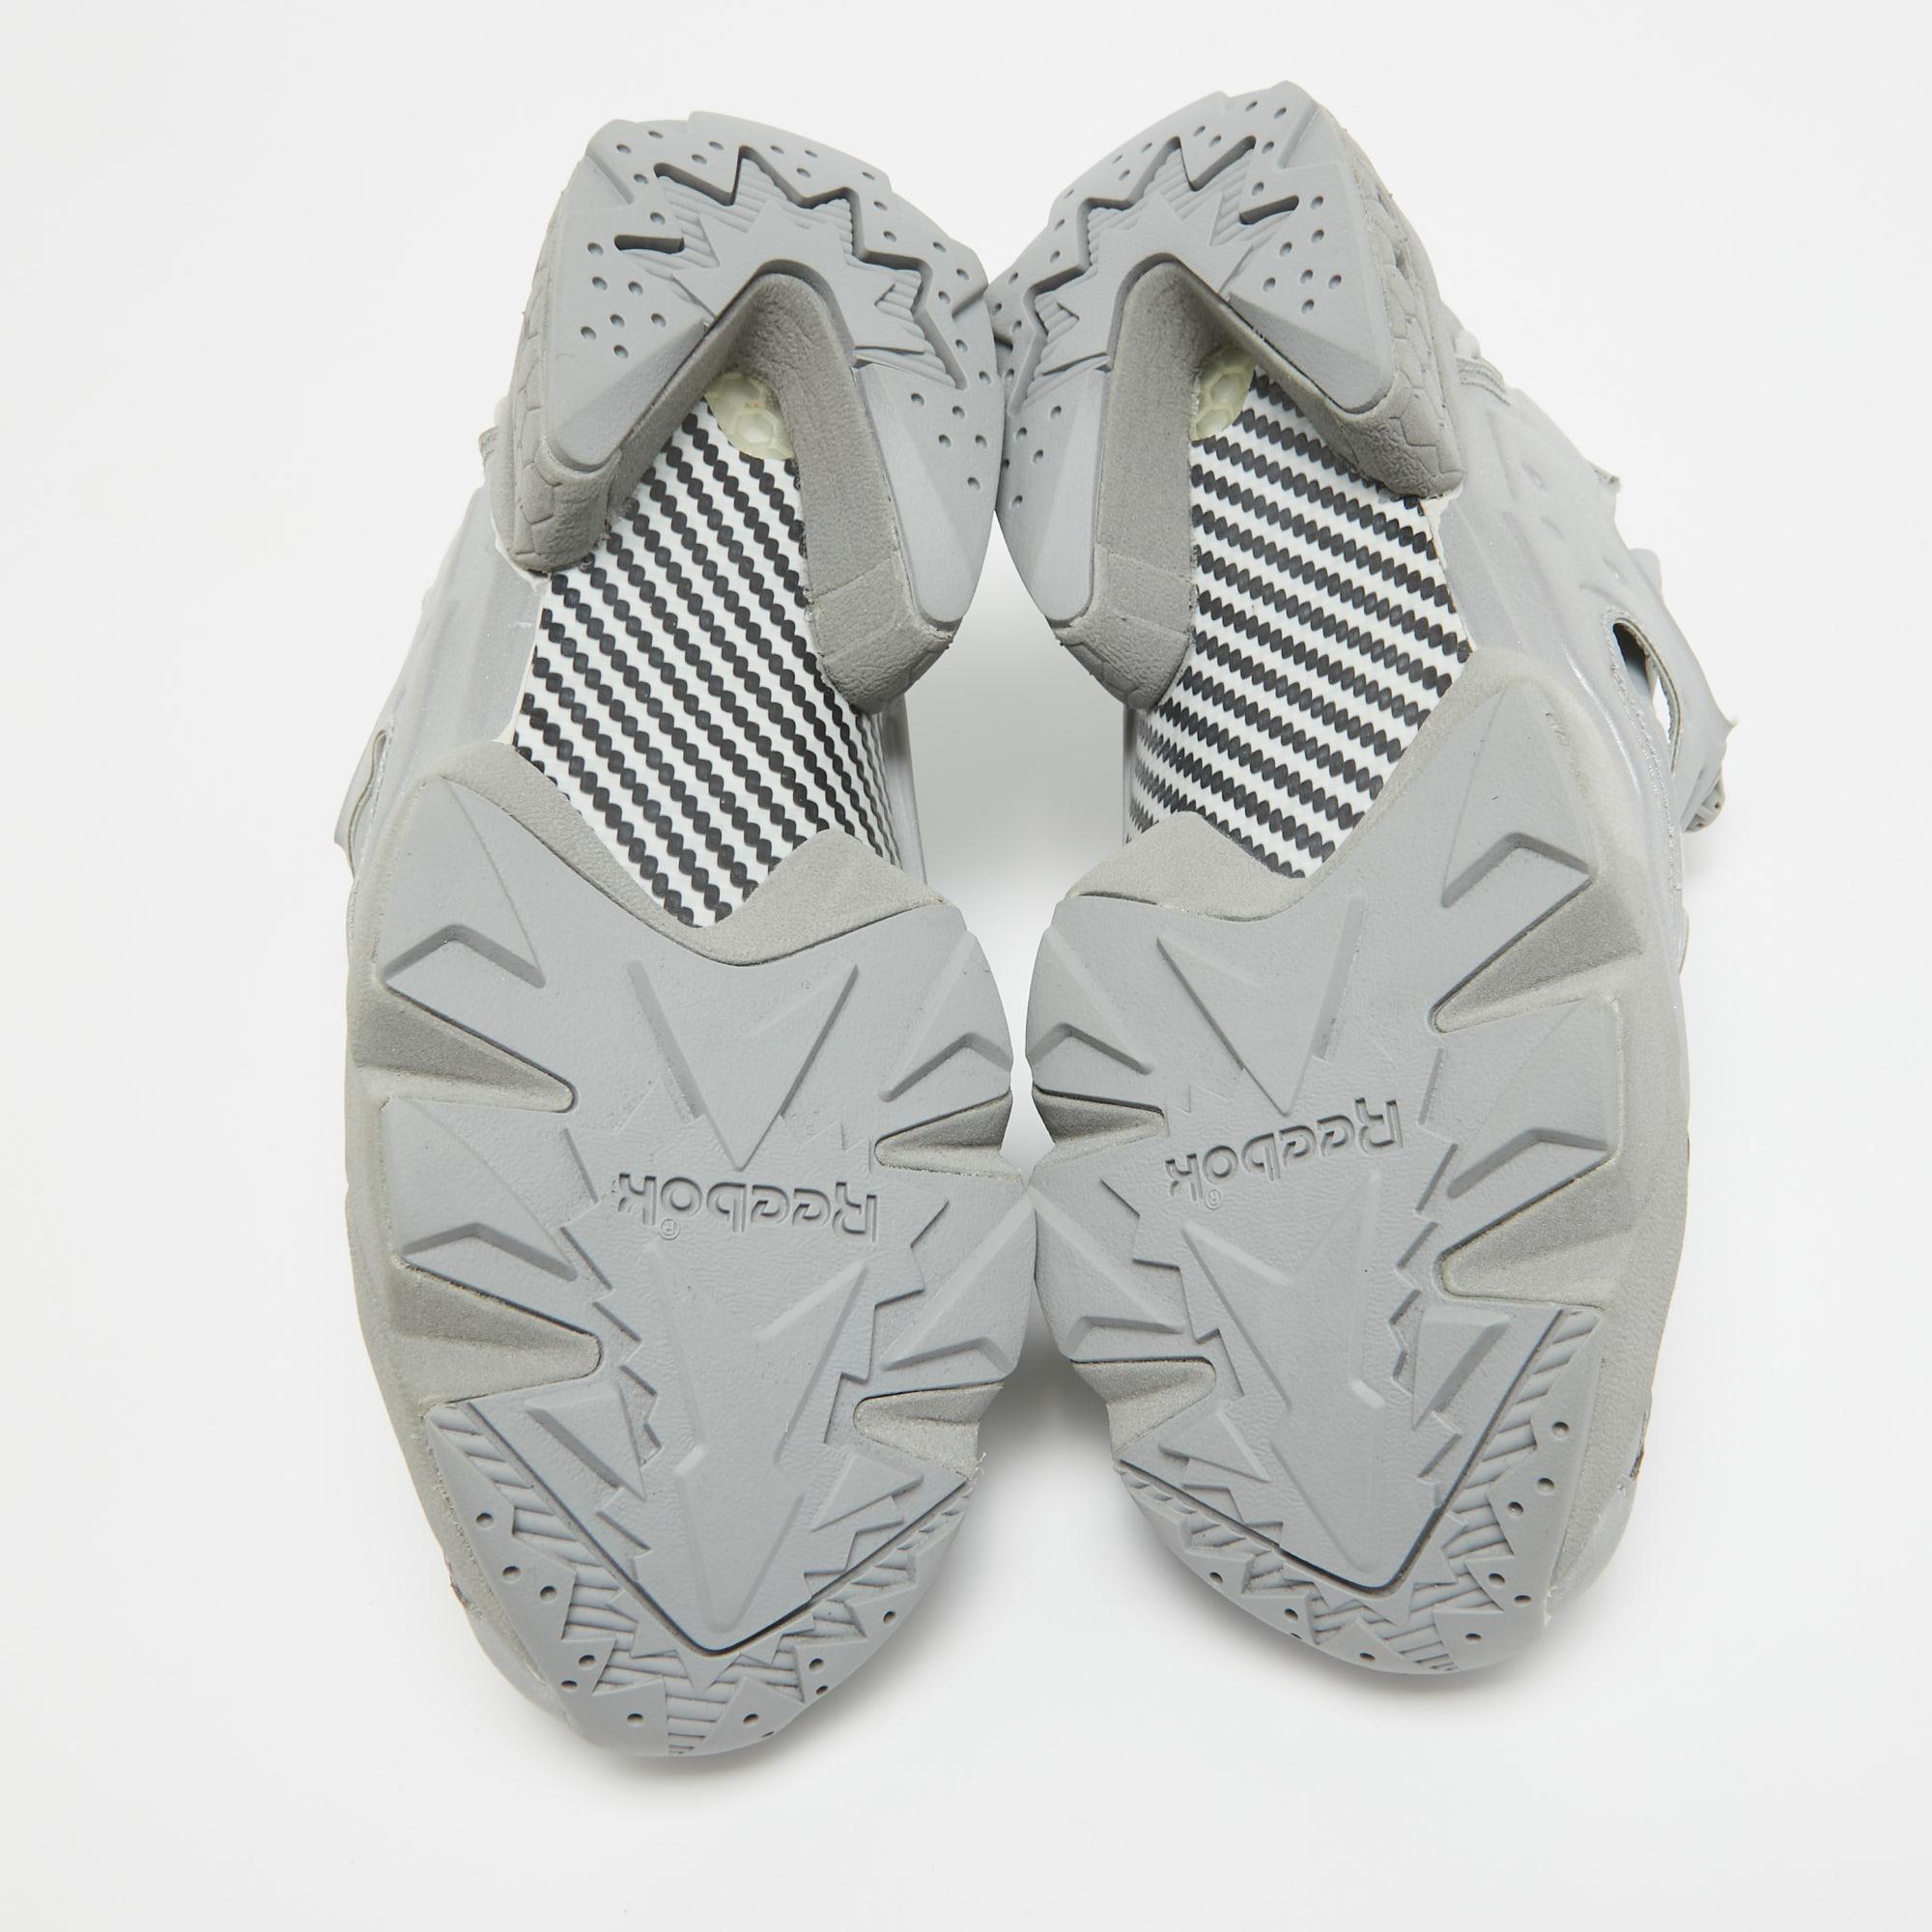 Vetements x Reebok Grey Reflective Fabric Instapump Fury Sneakers Size 38.5 For Sale 5